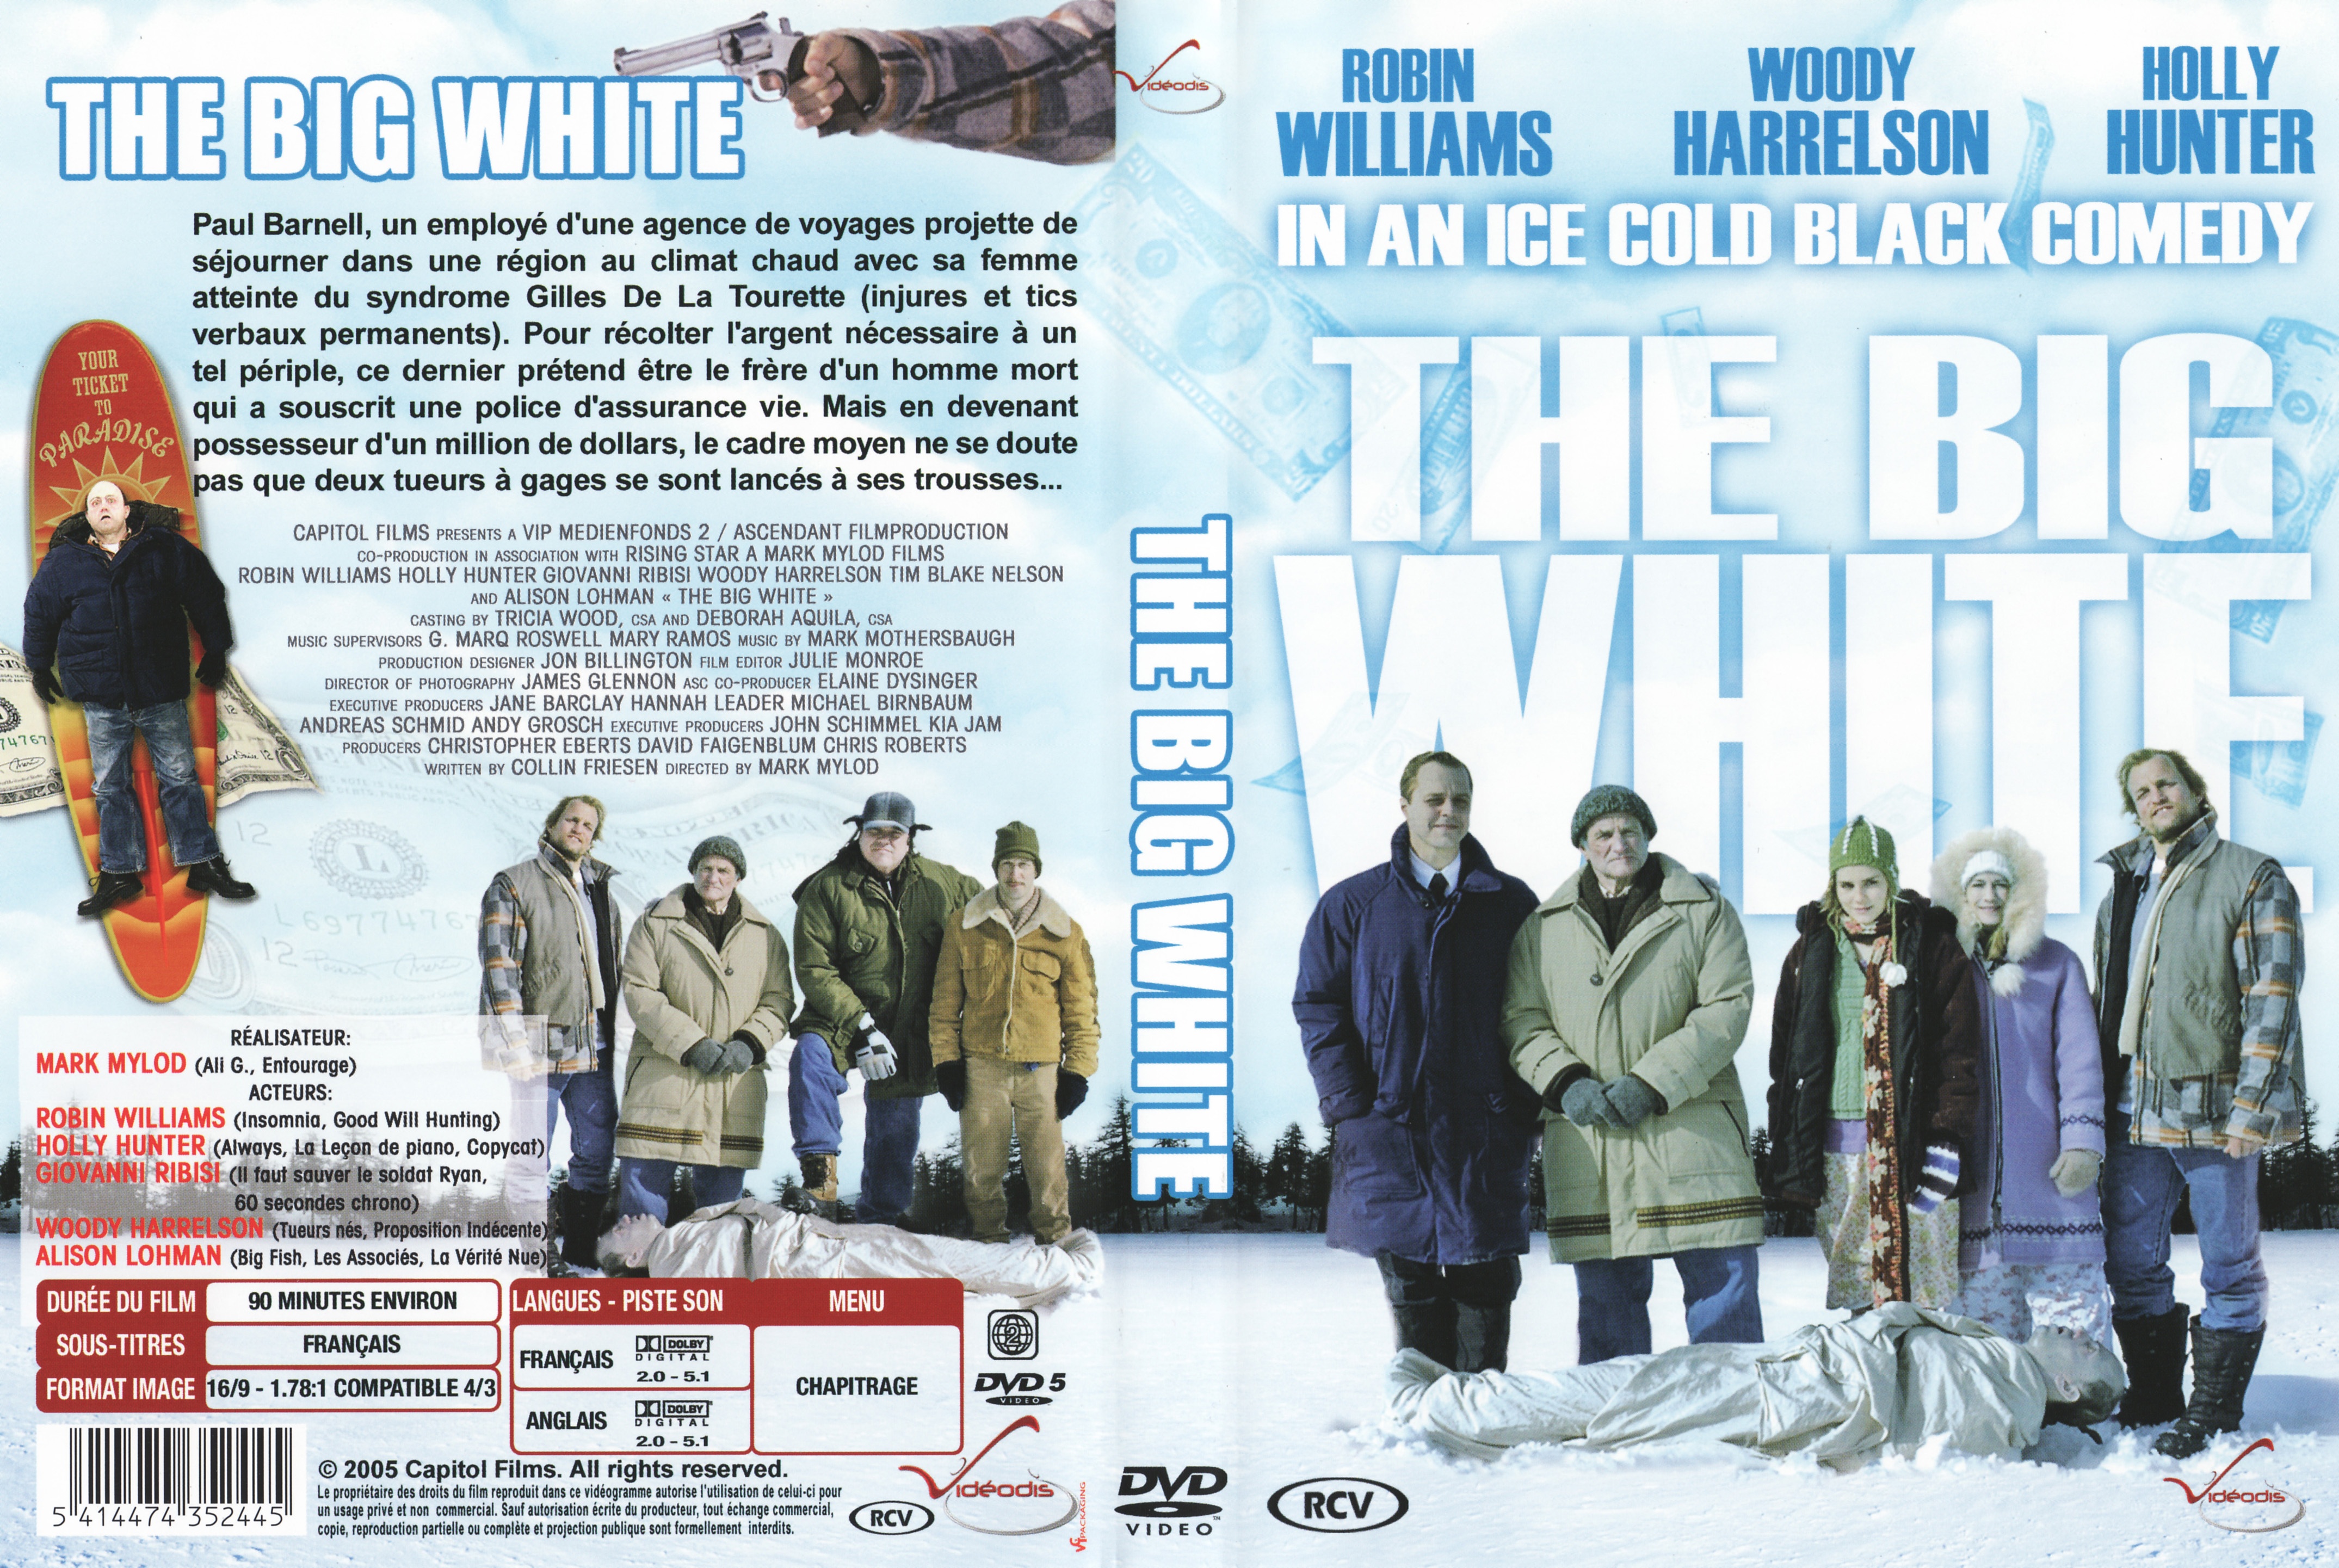 Jaquette DVD The big white